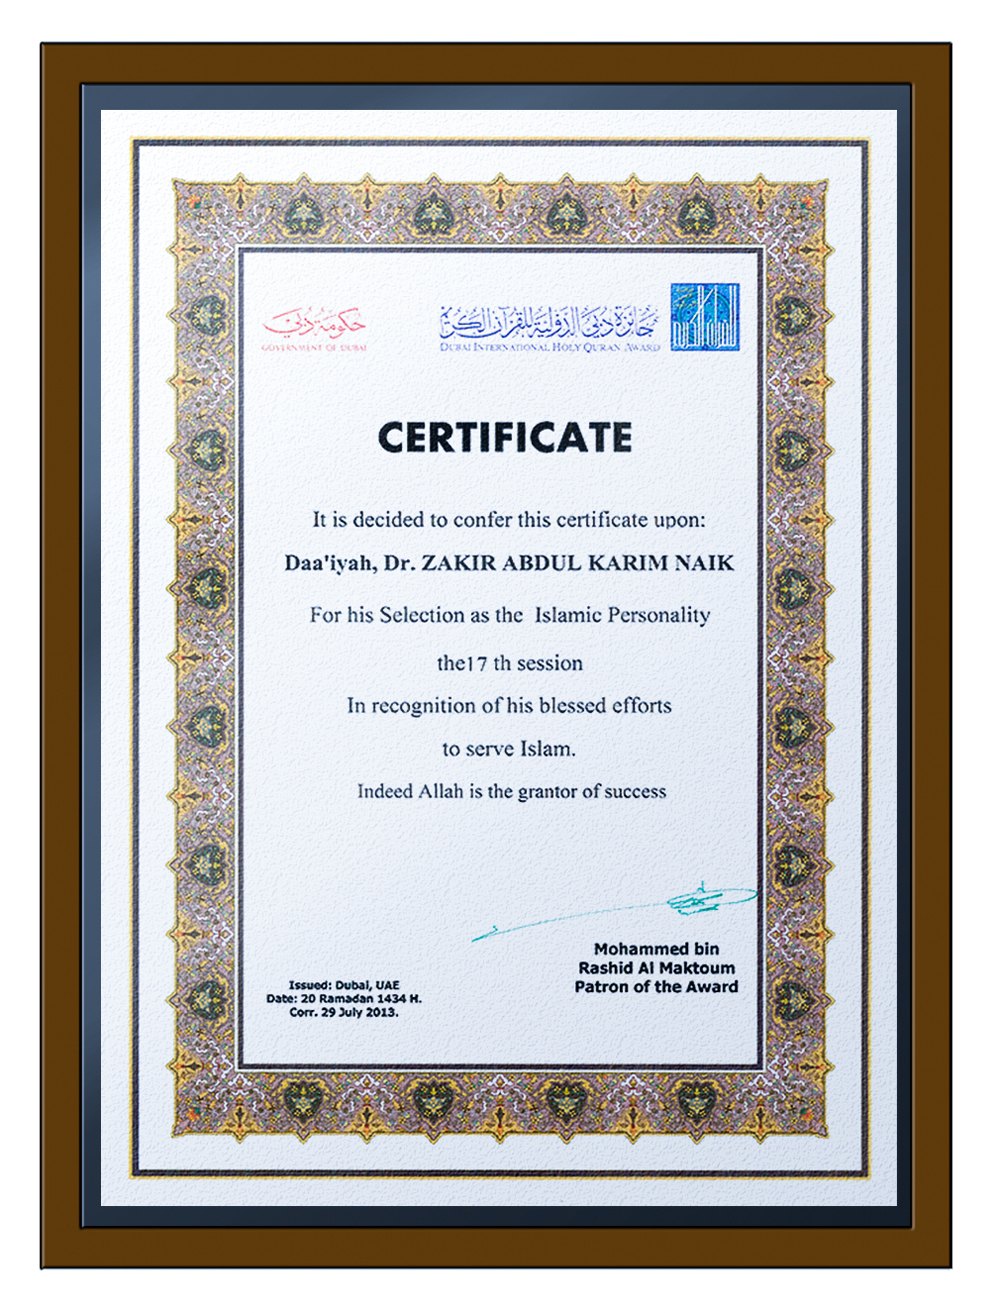 Dubai International Holy Qur'an Award for Islamic Personality